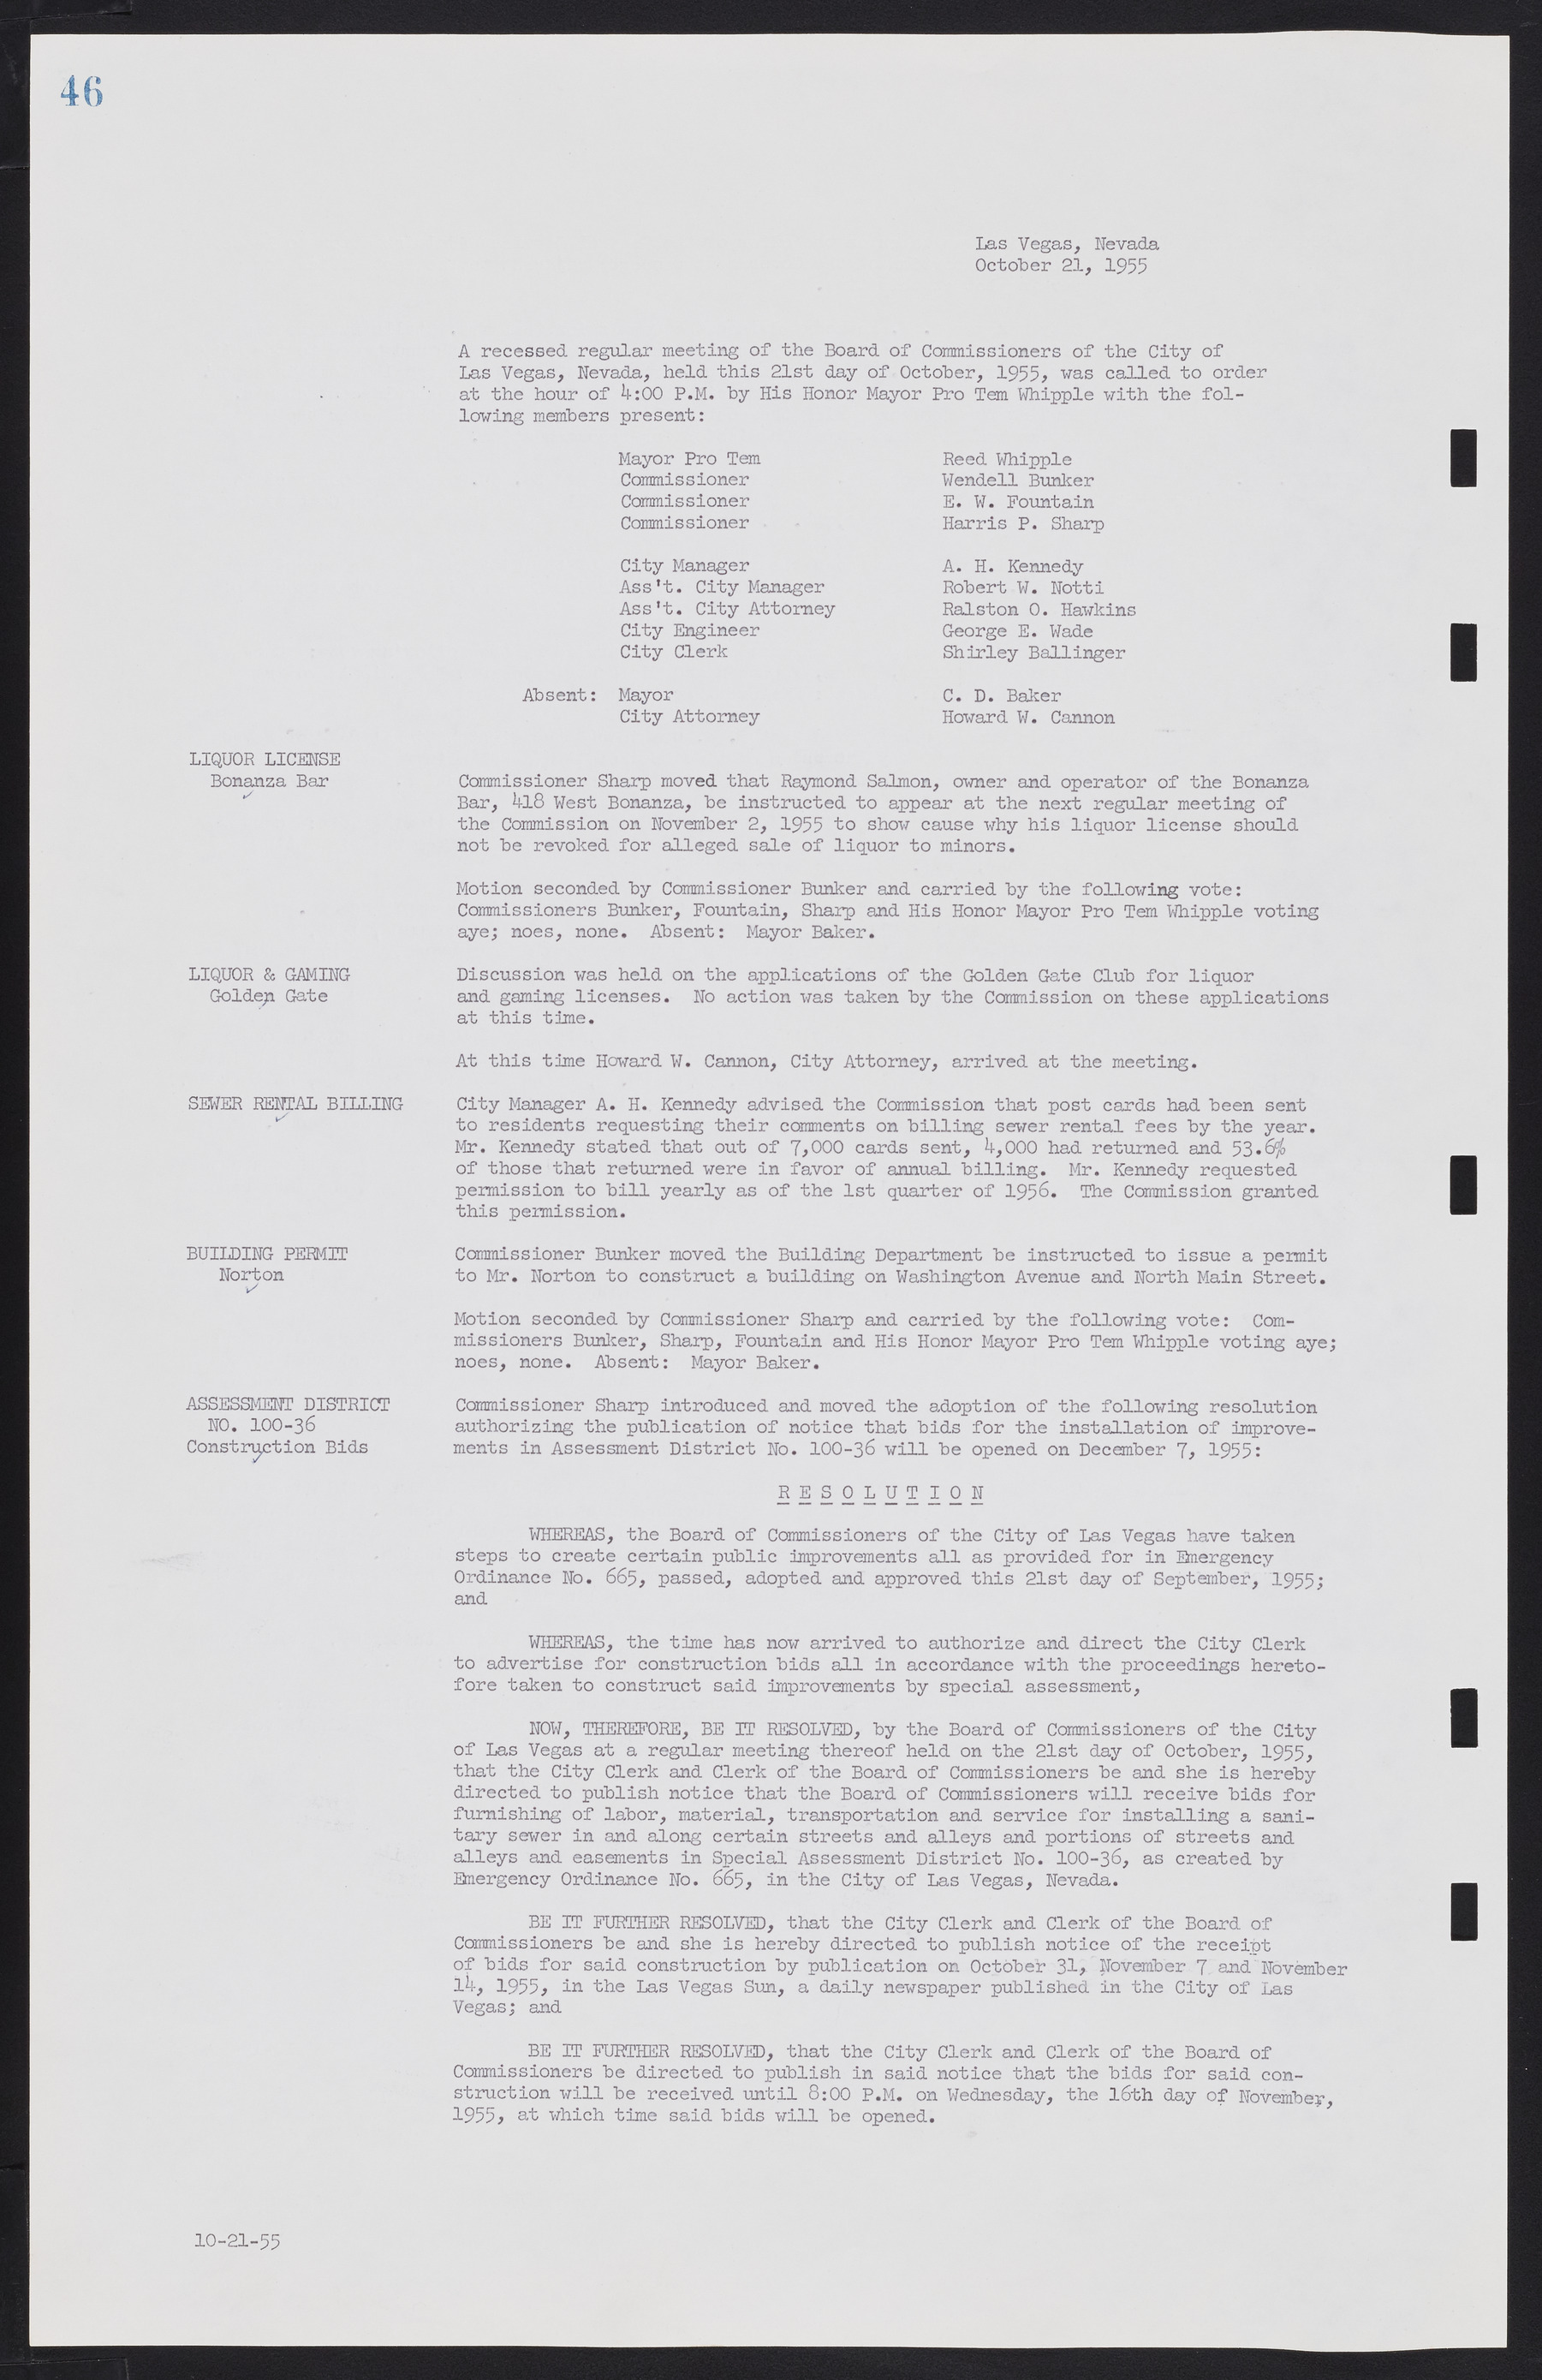 Las Vegas City Commission Minutes, September 21, 1955 to November 20, 1957, lvc000010-52